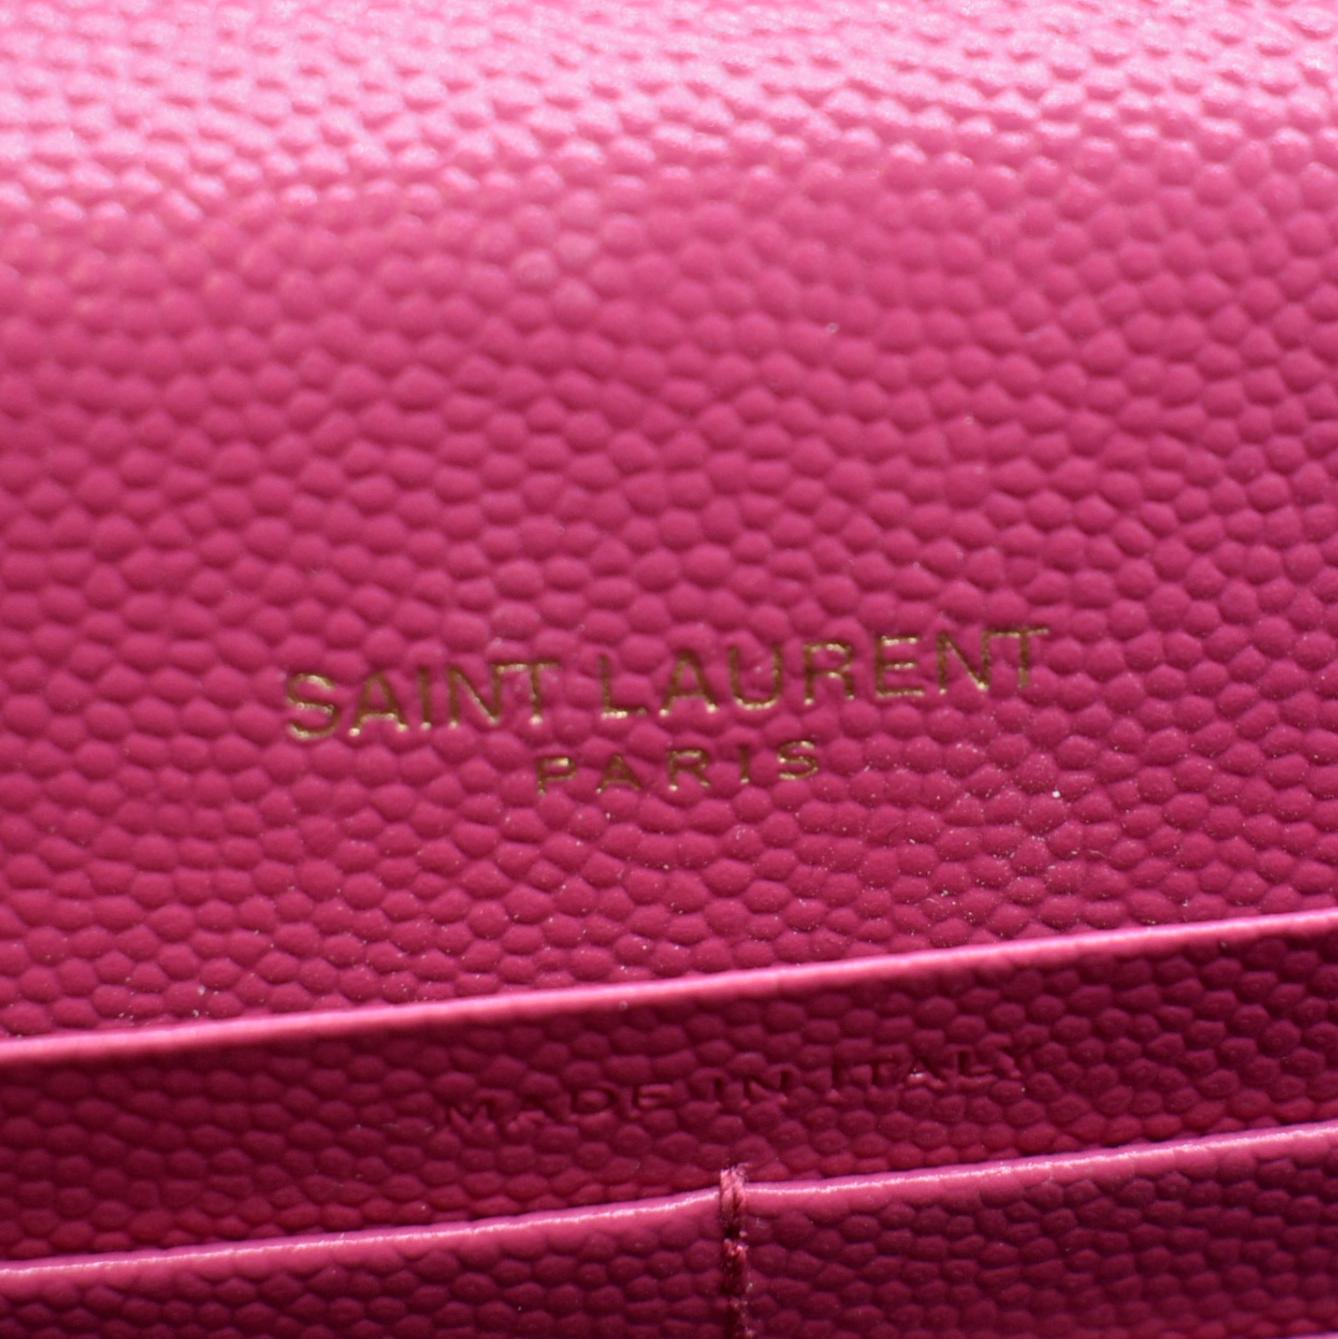 Yves Saint Laurent Monogram Card Case Grain Embossed Leather Pink Gold YSL